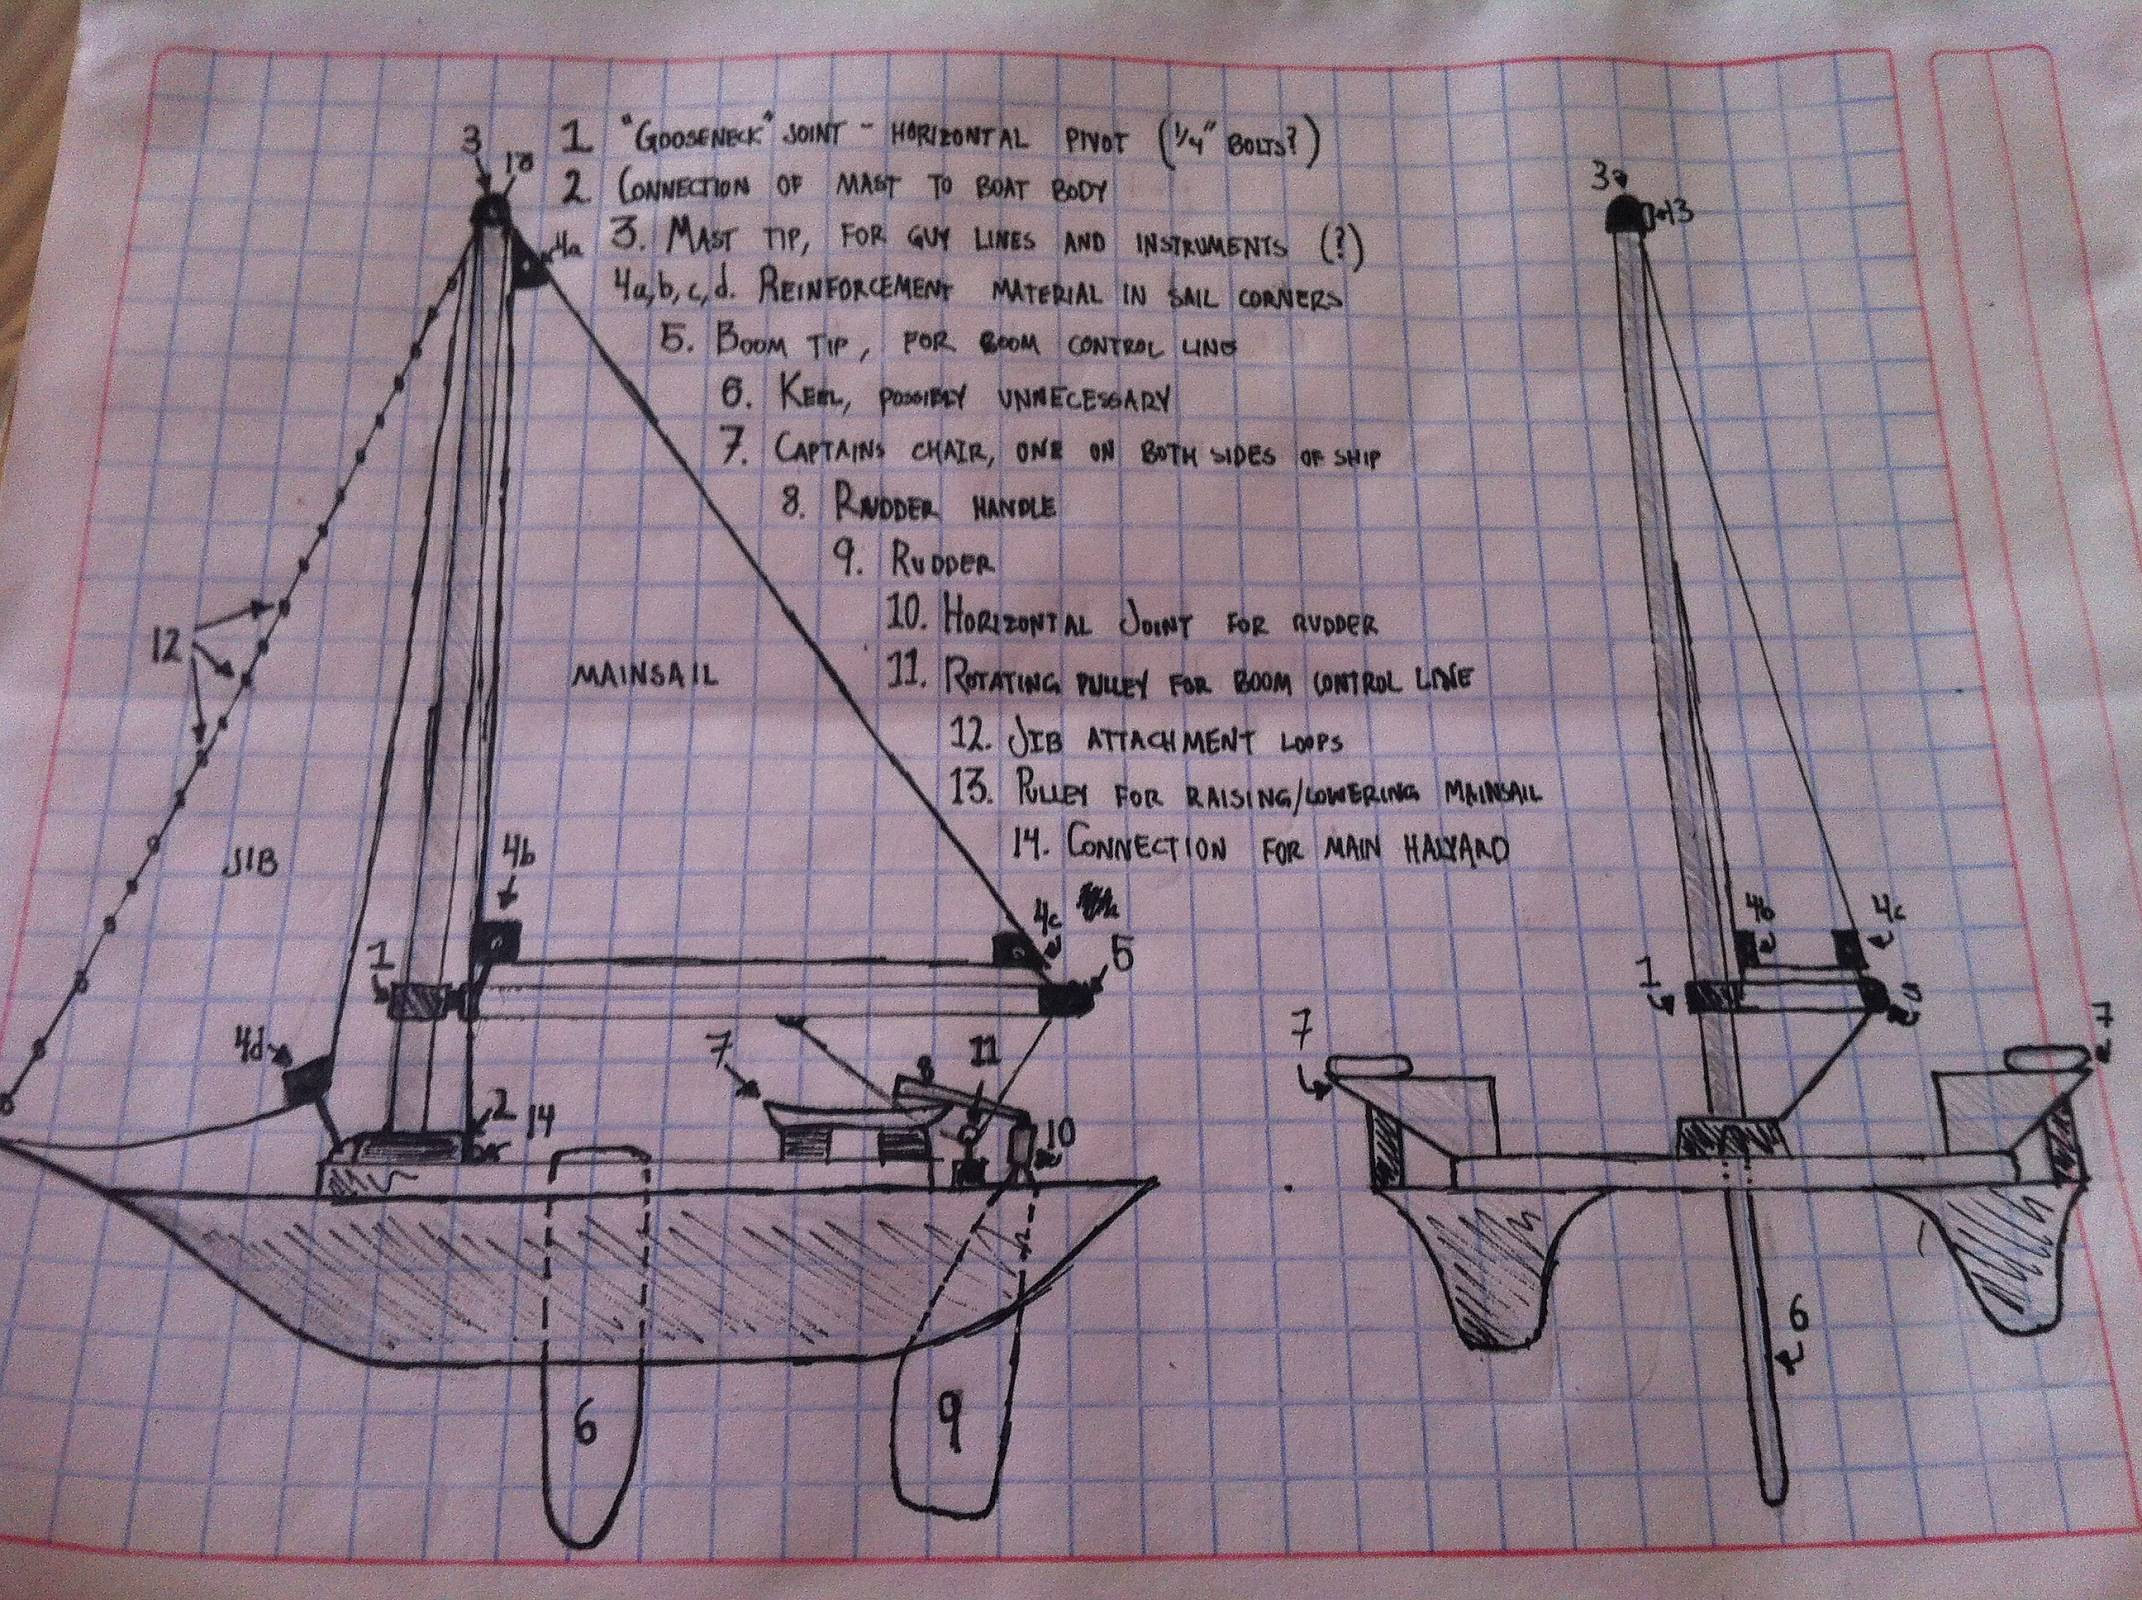 Best ideas about DIY Sailboat Plans
. Save or Pin Diy Catamaran Sailboat Plans Wallpaperall Now.